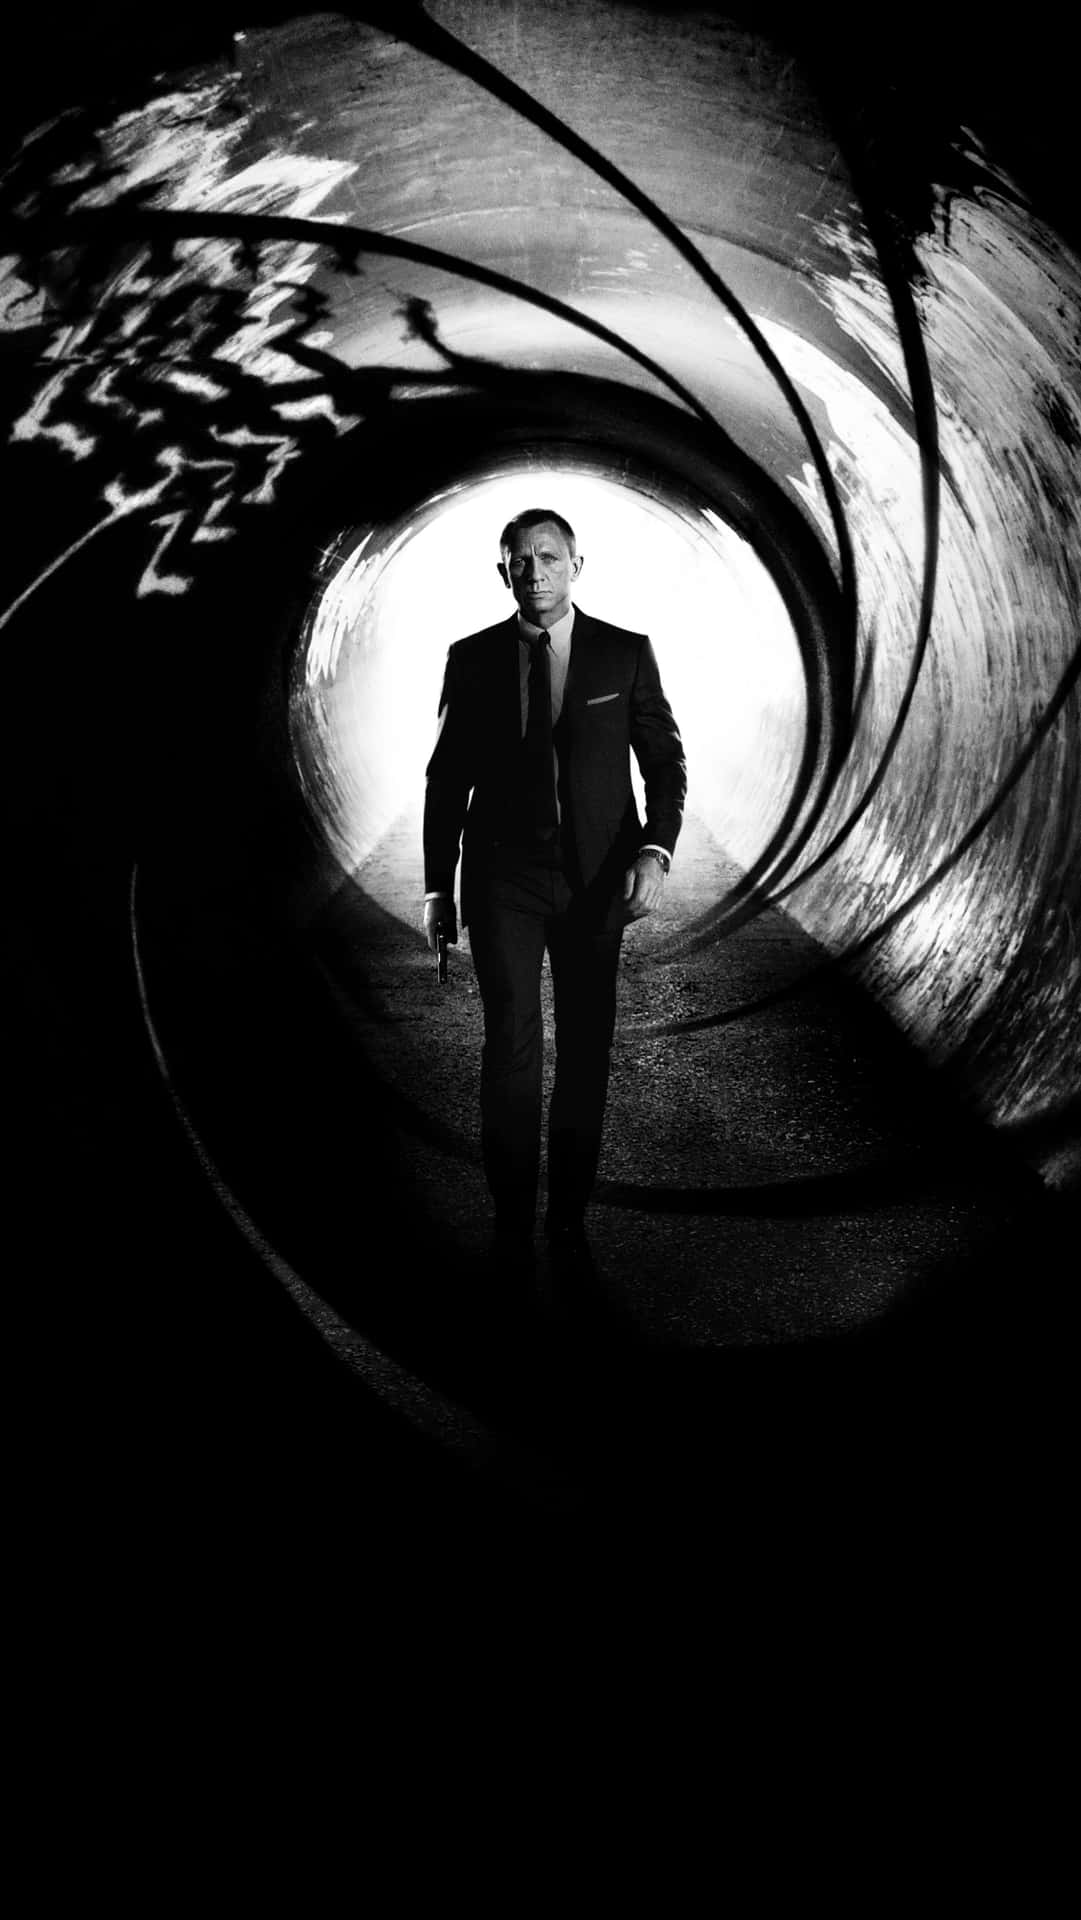 James Bond Background